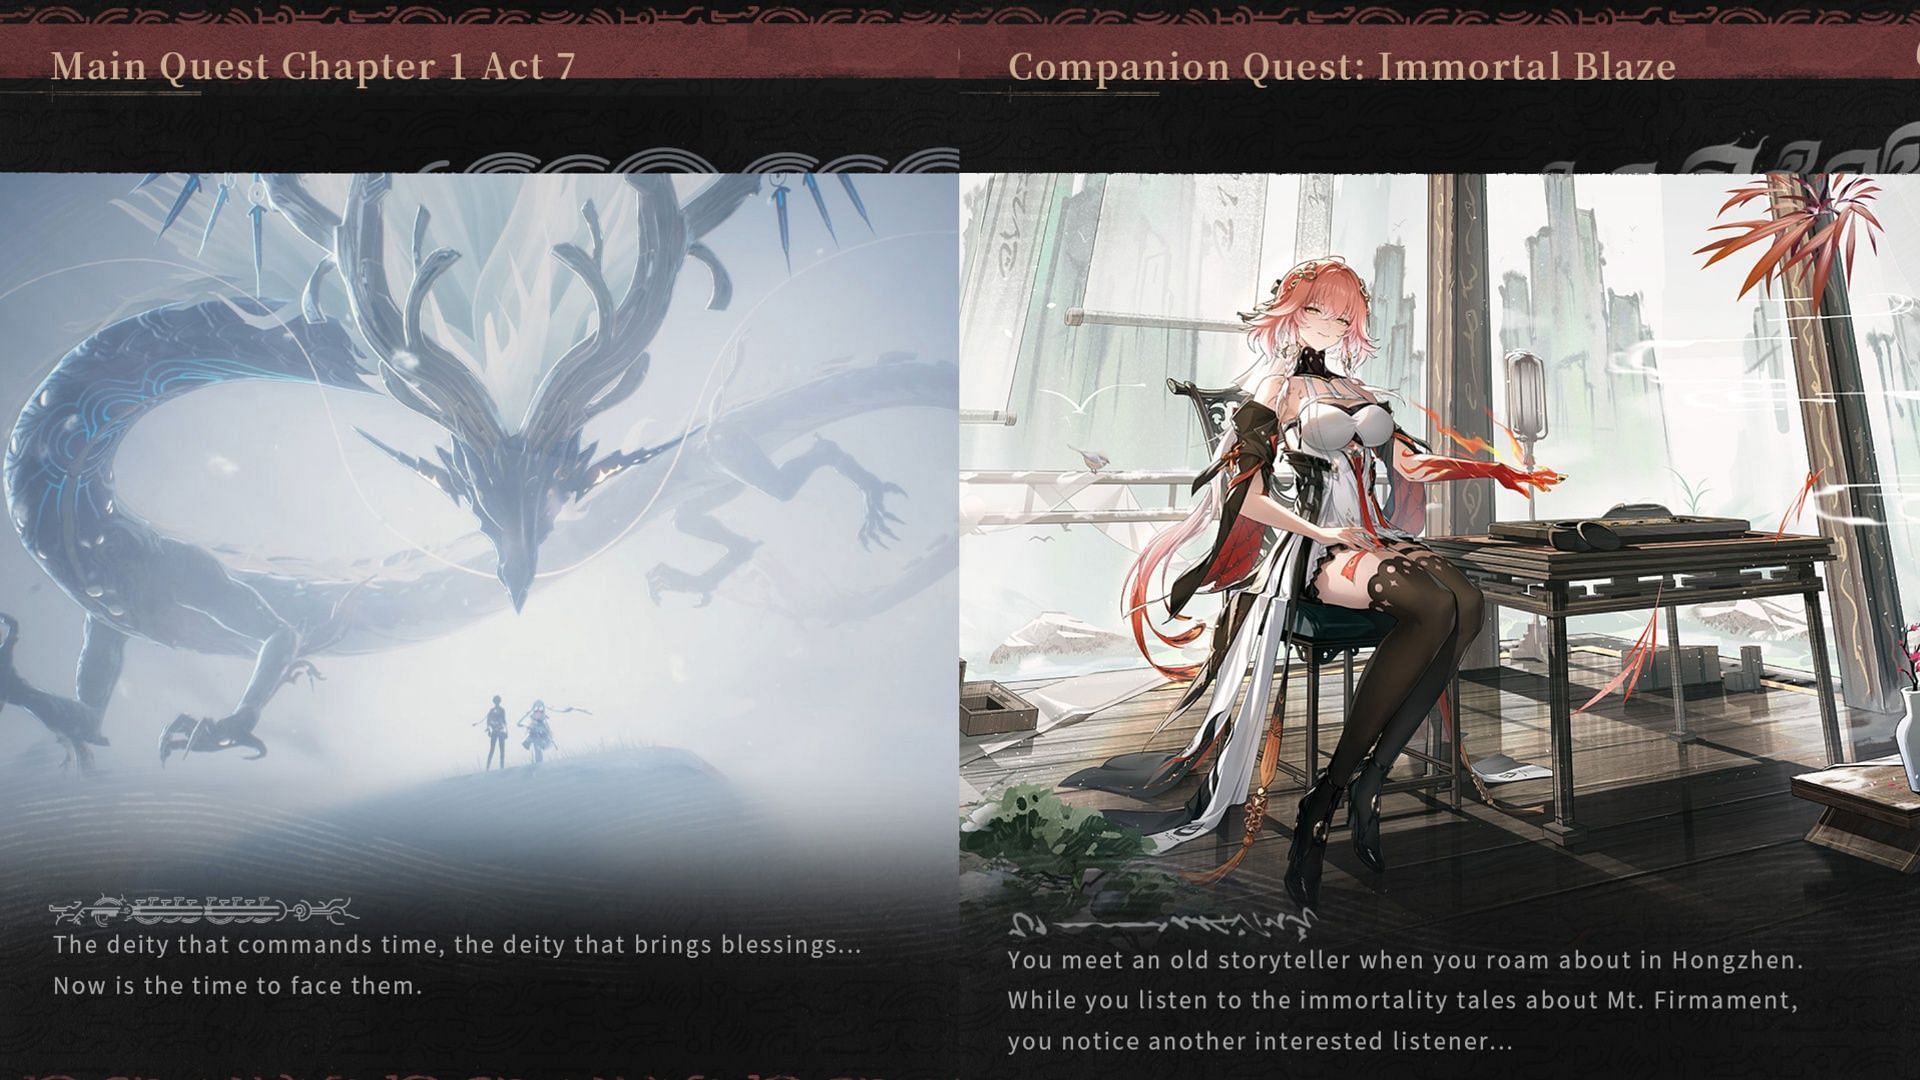 New Main Quest Act and Companion Story (Image via Kuro Games)